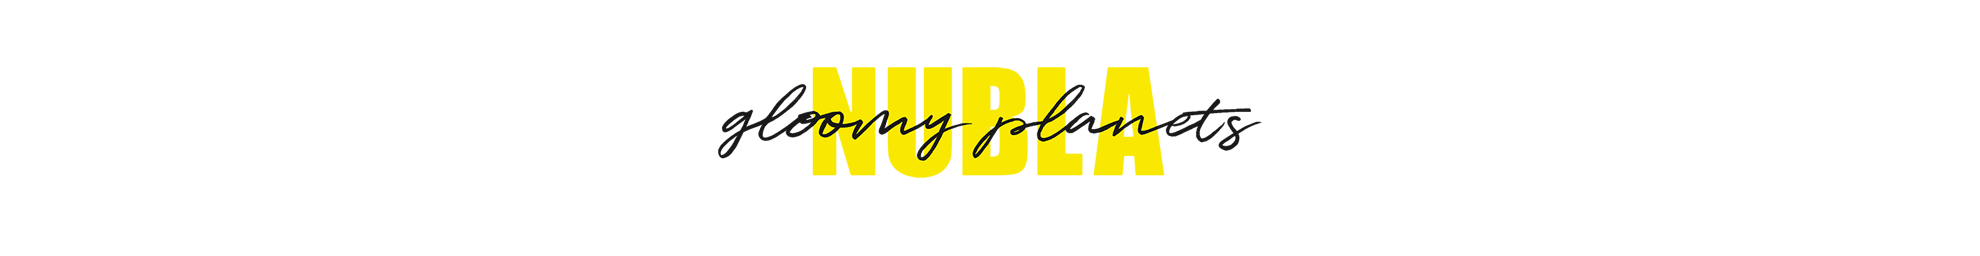 Nubla2